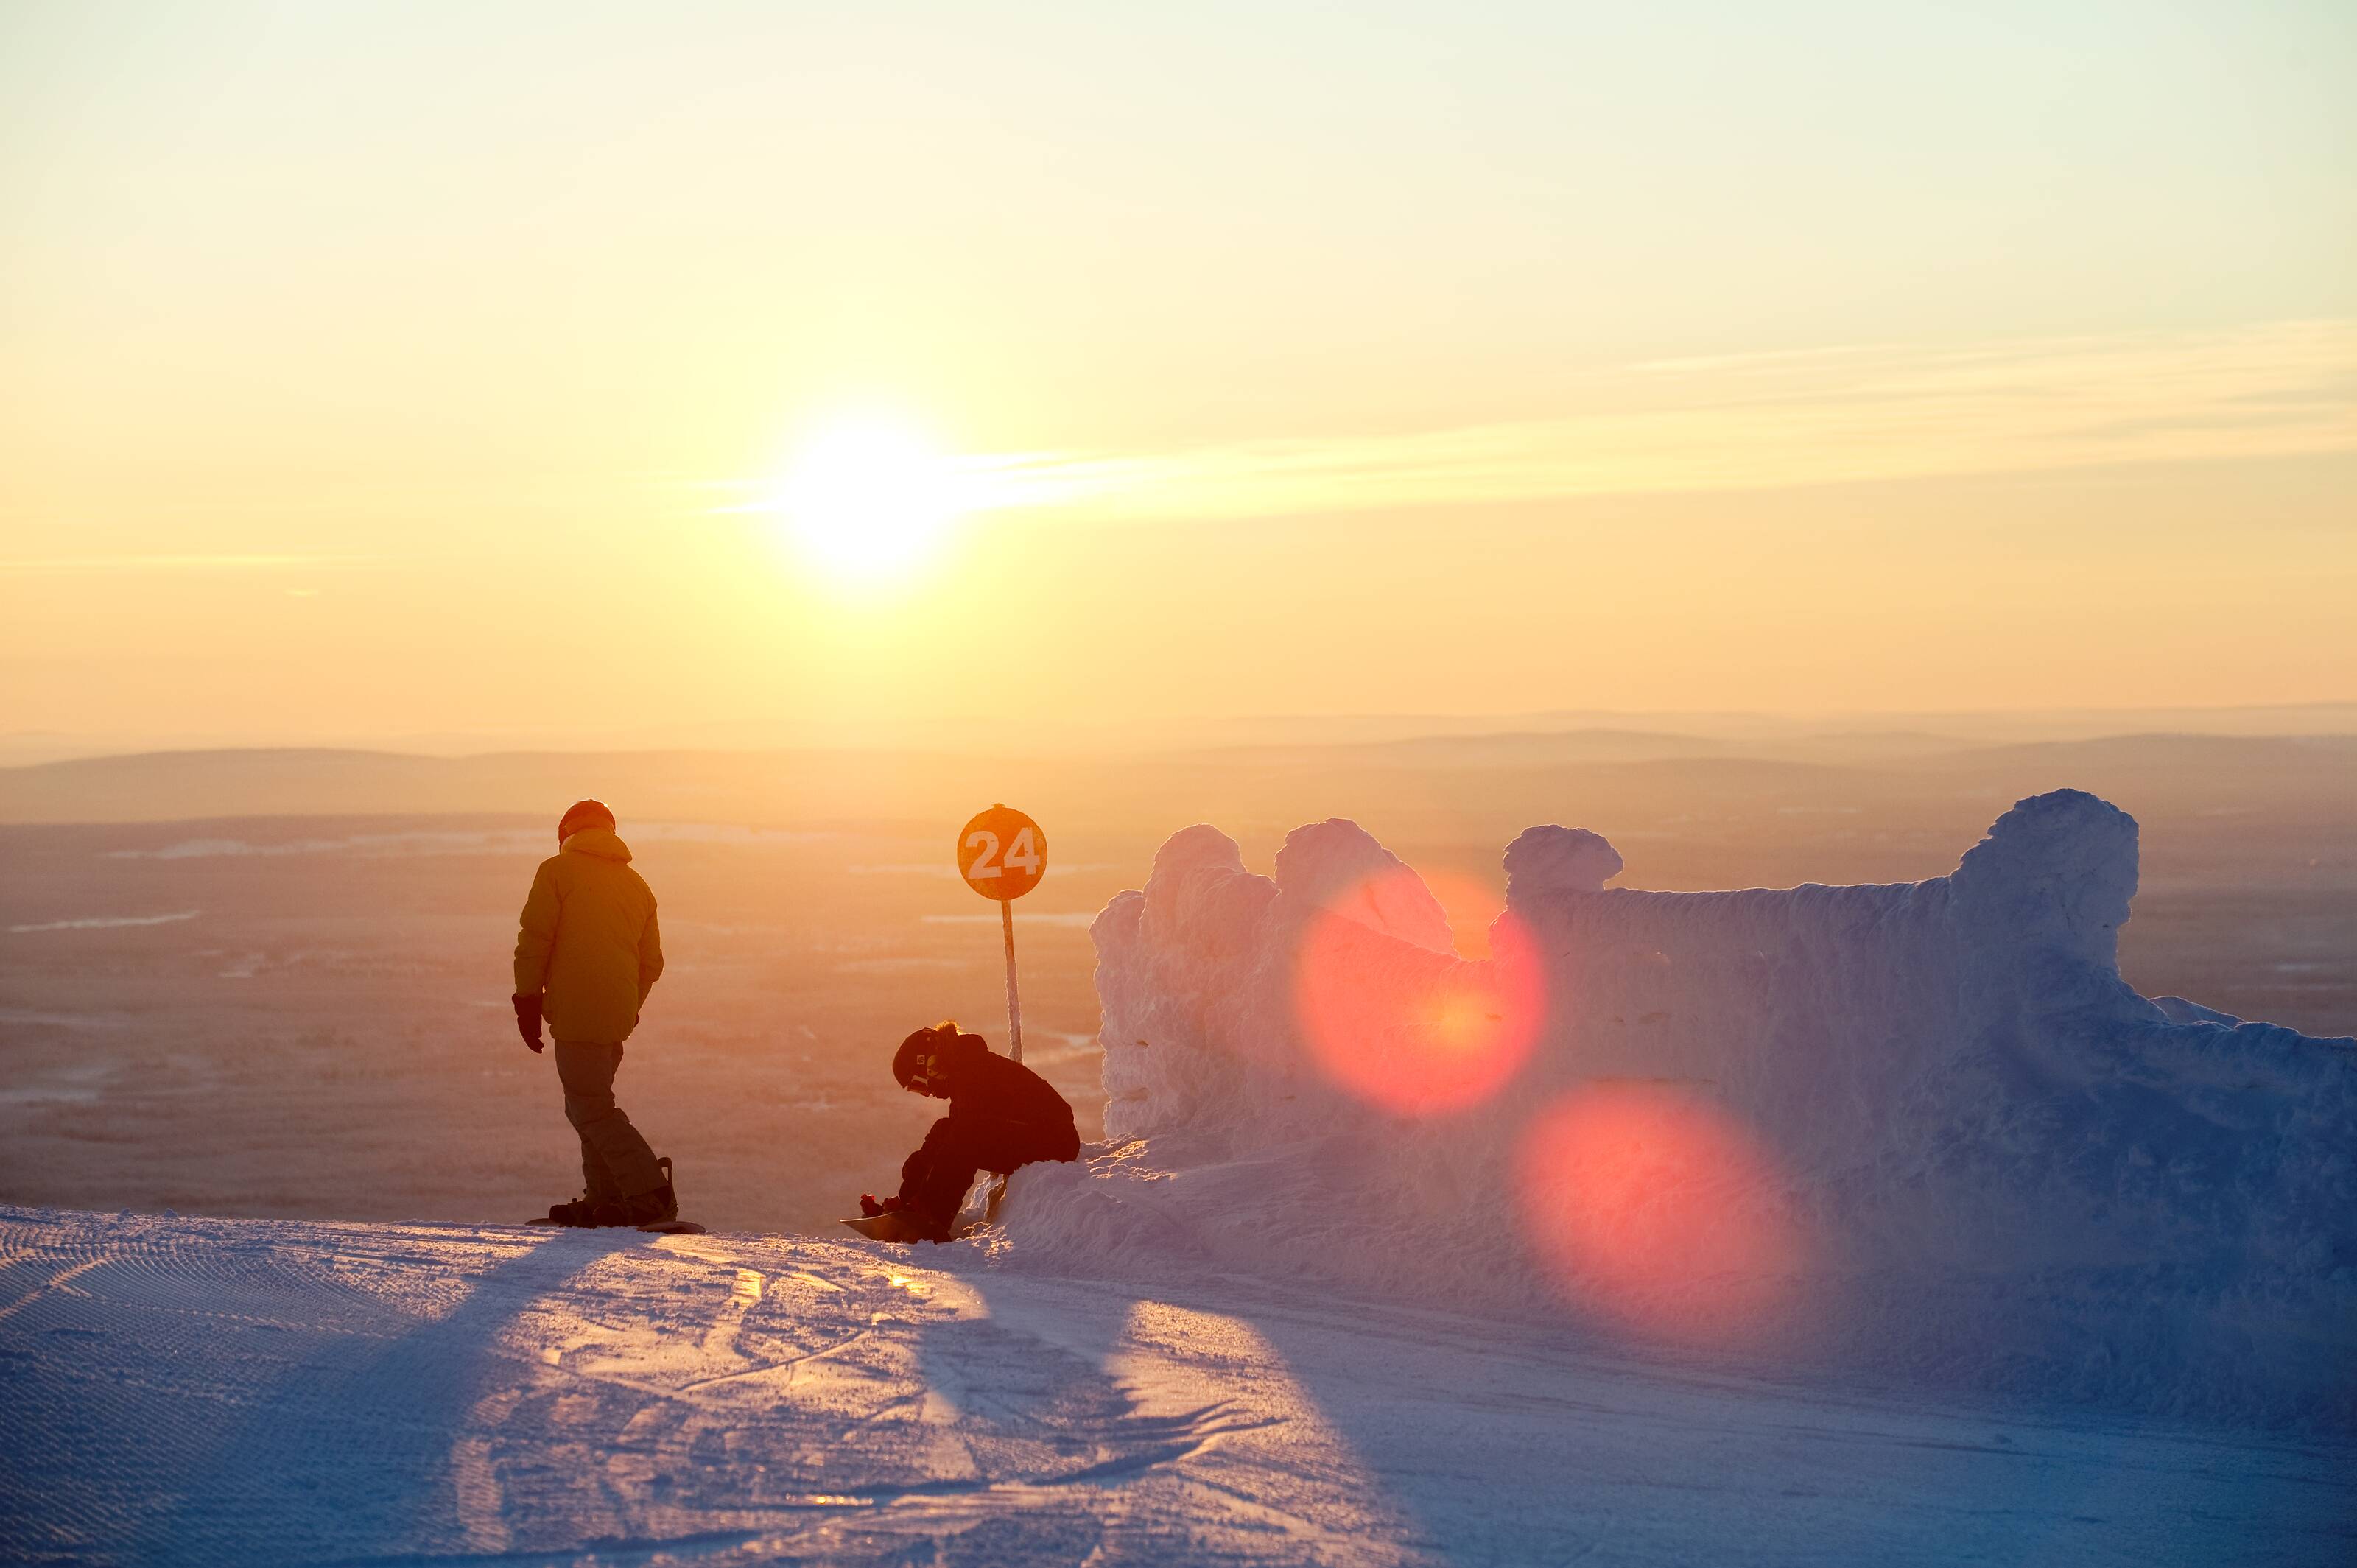 two snowboarders prepare to descend a slope in a Finnish fell landscape